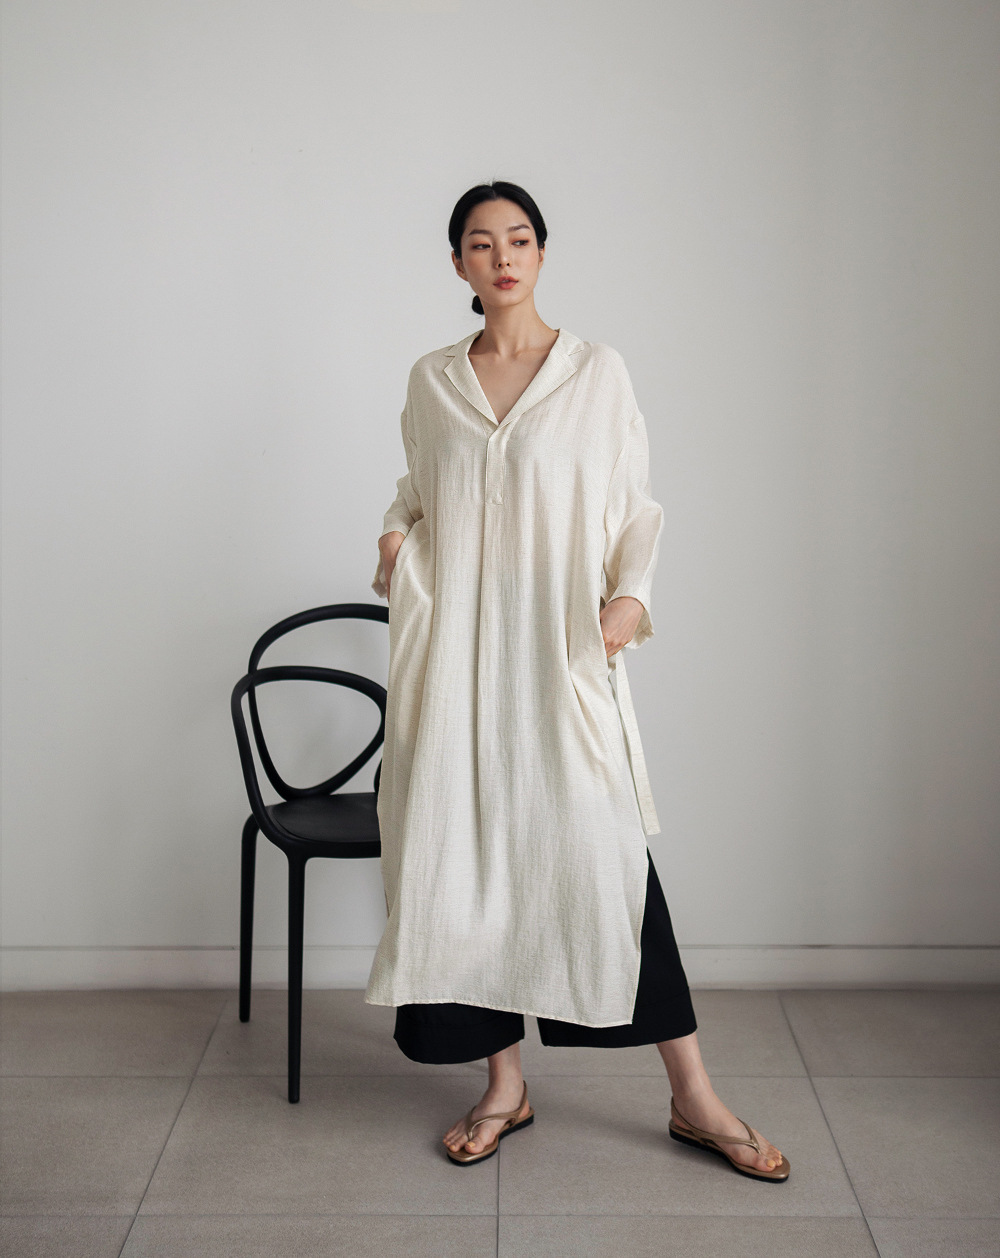 Japanese style simple cotton linen solid color dress